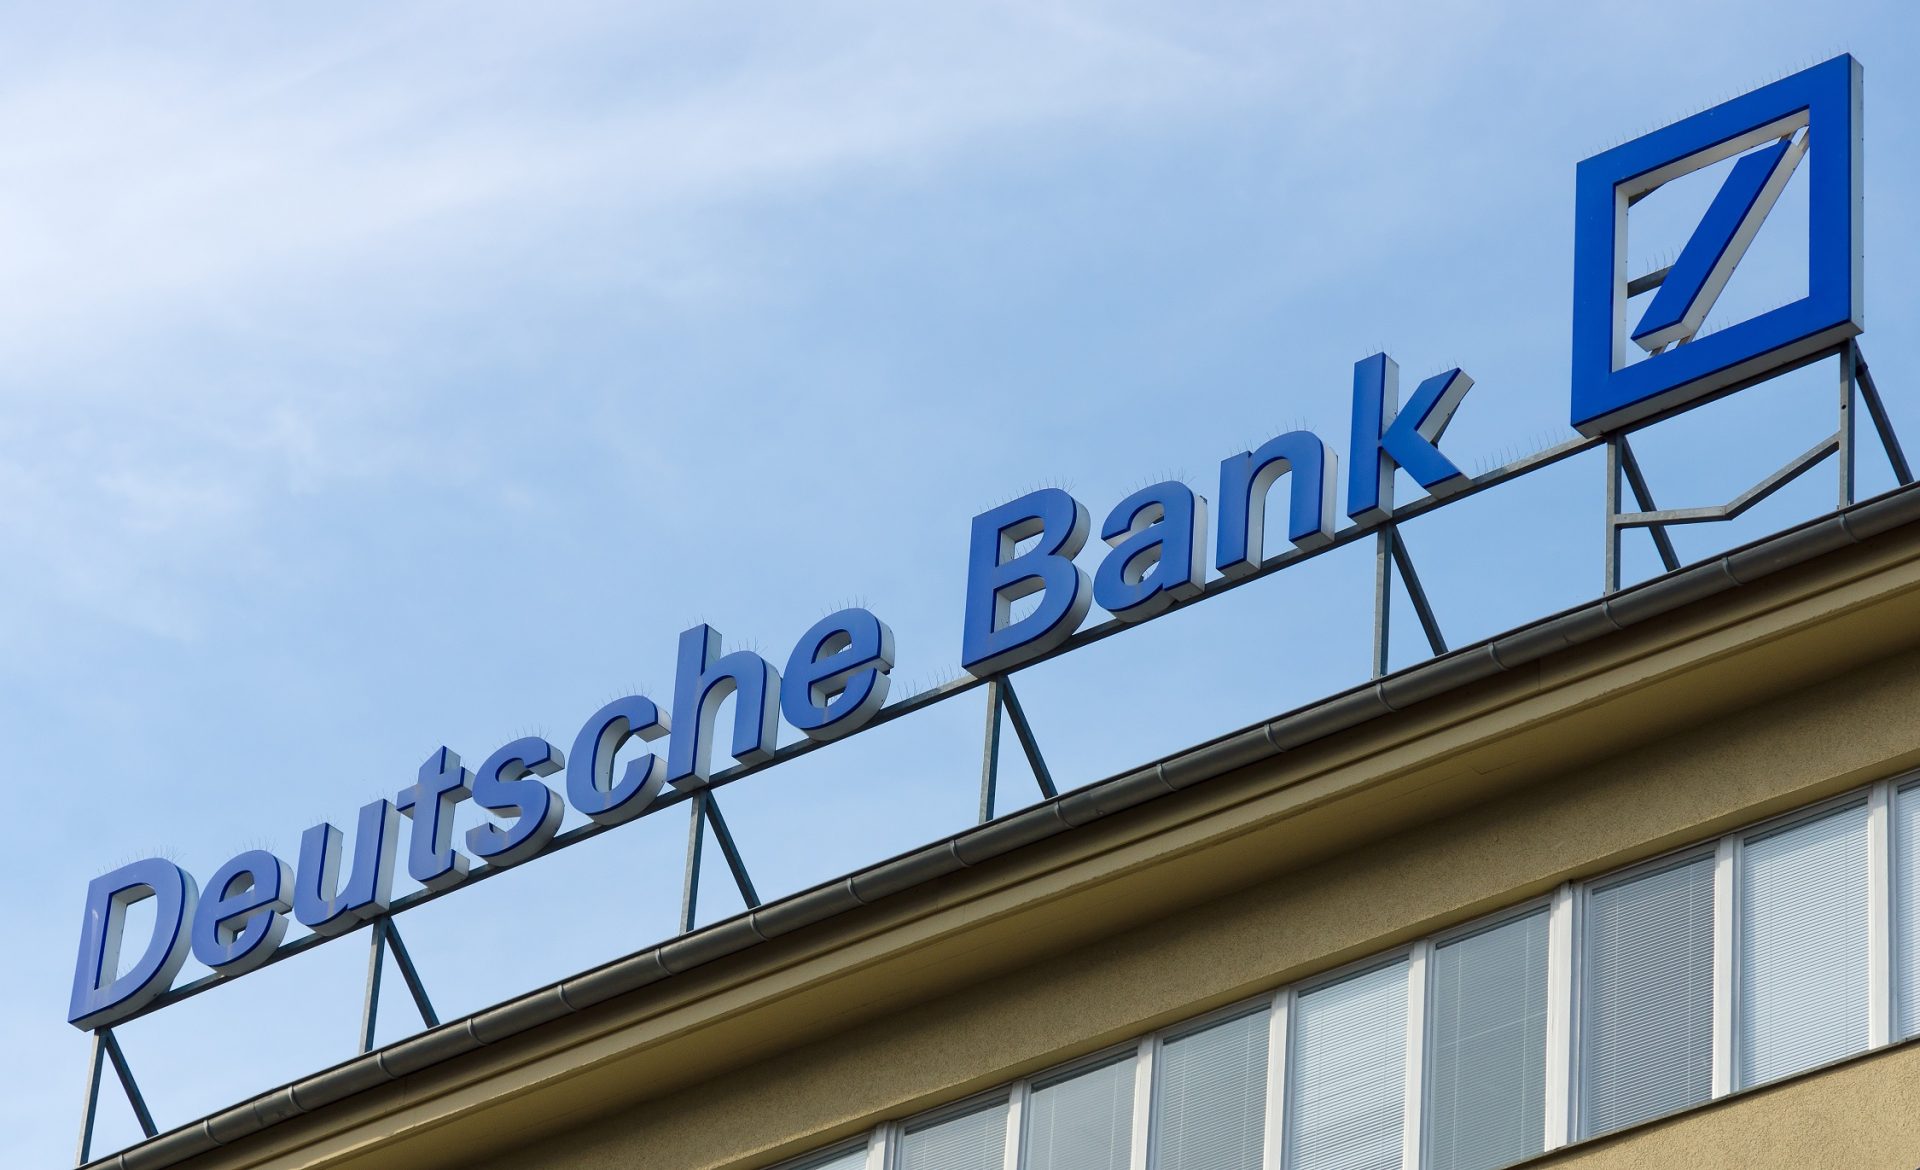 Deutsche bank: A Queda de um gigante